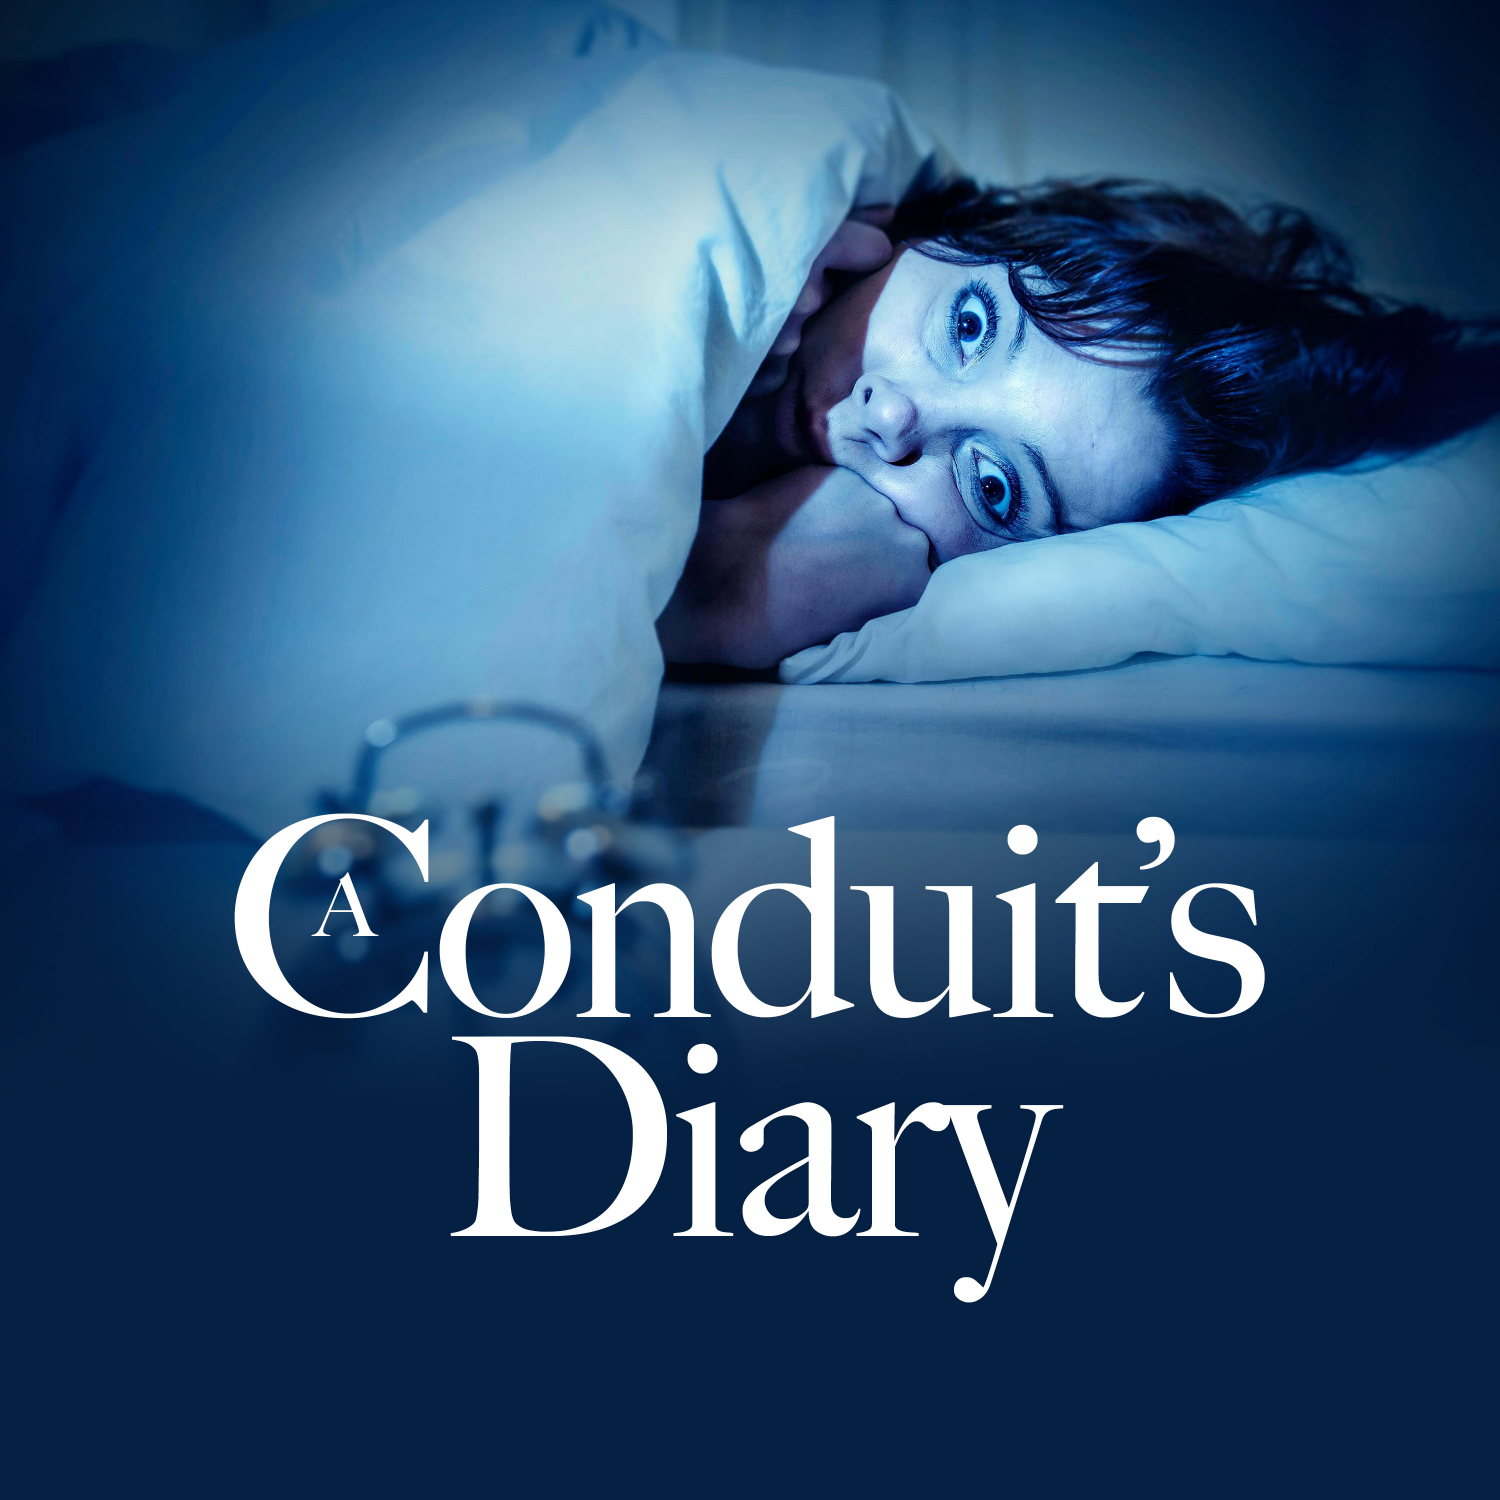 A Conduit's Diary